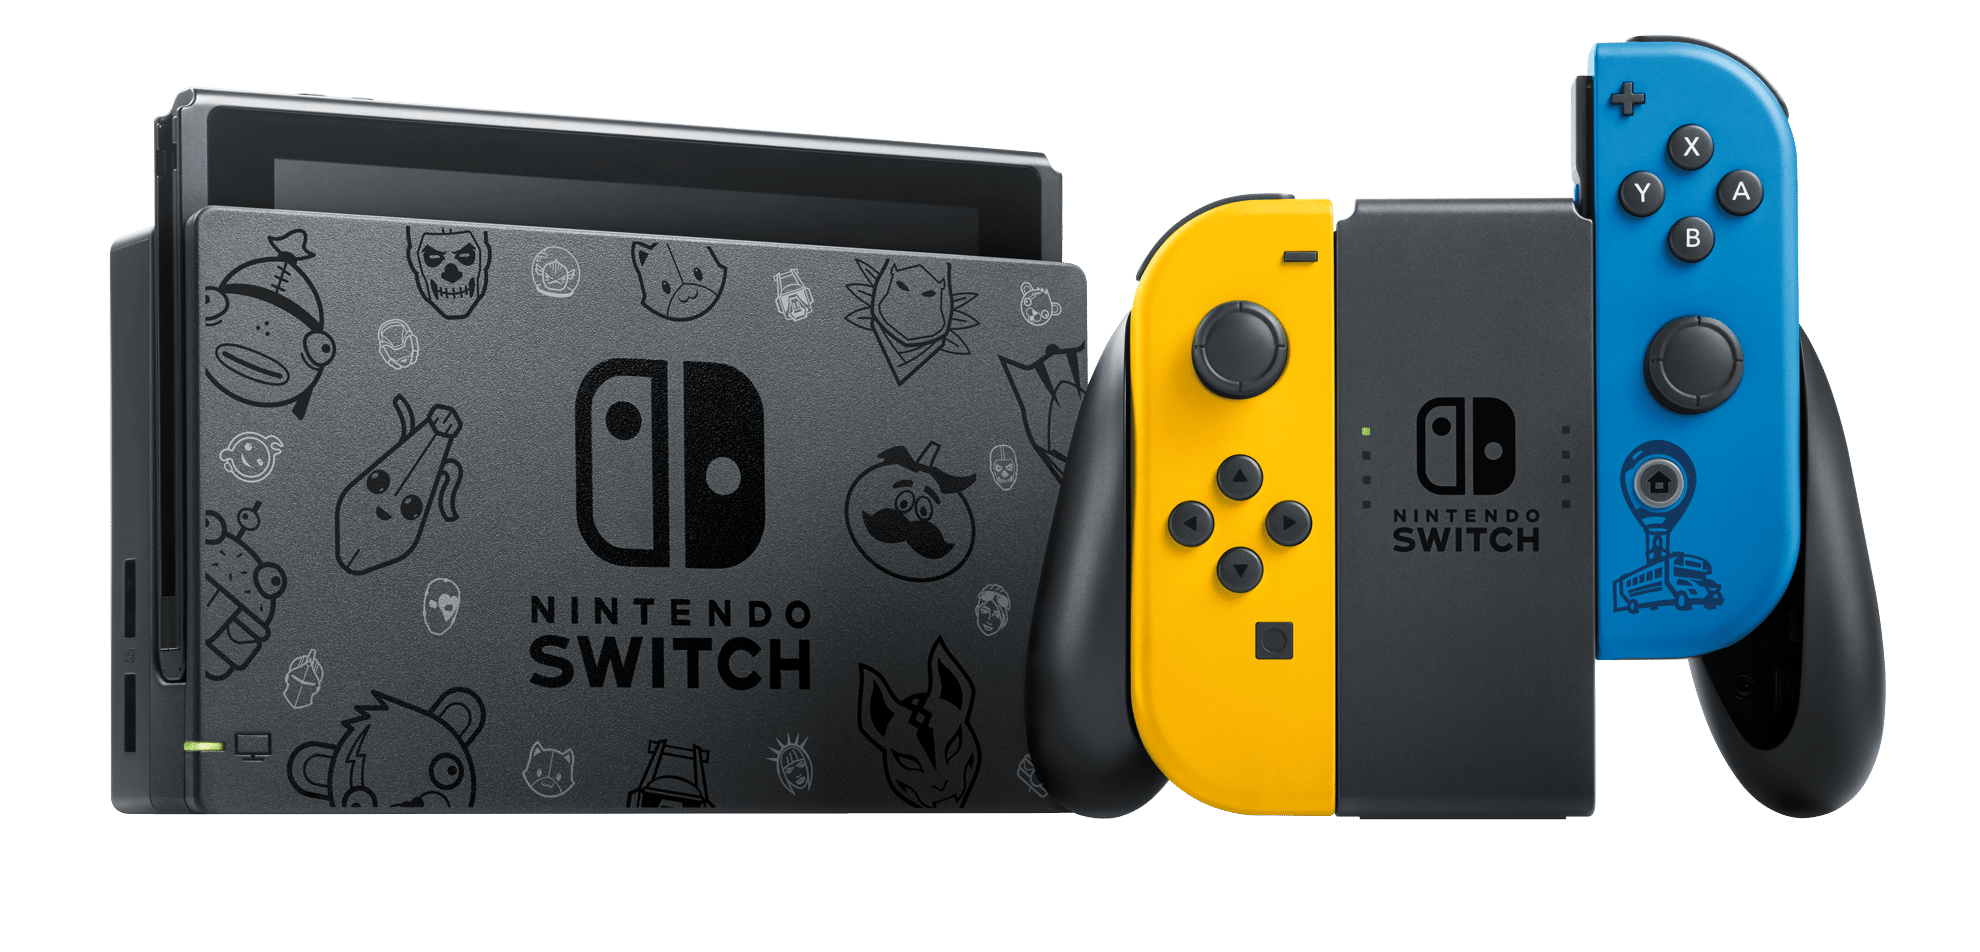 Nintendo switch интернет. Игровая консоль Nintendo Switch. Игровая приставка Nintendo Switch «особое издание Fortnite». Nintendo Switch Rev 2. Nintendo Switch 2018.